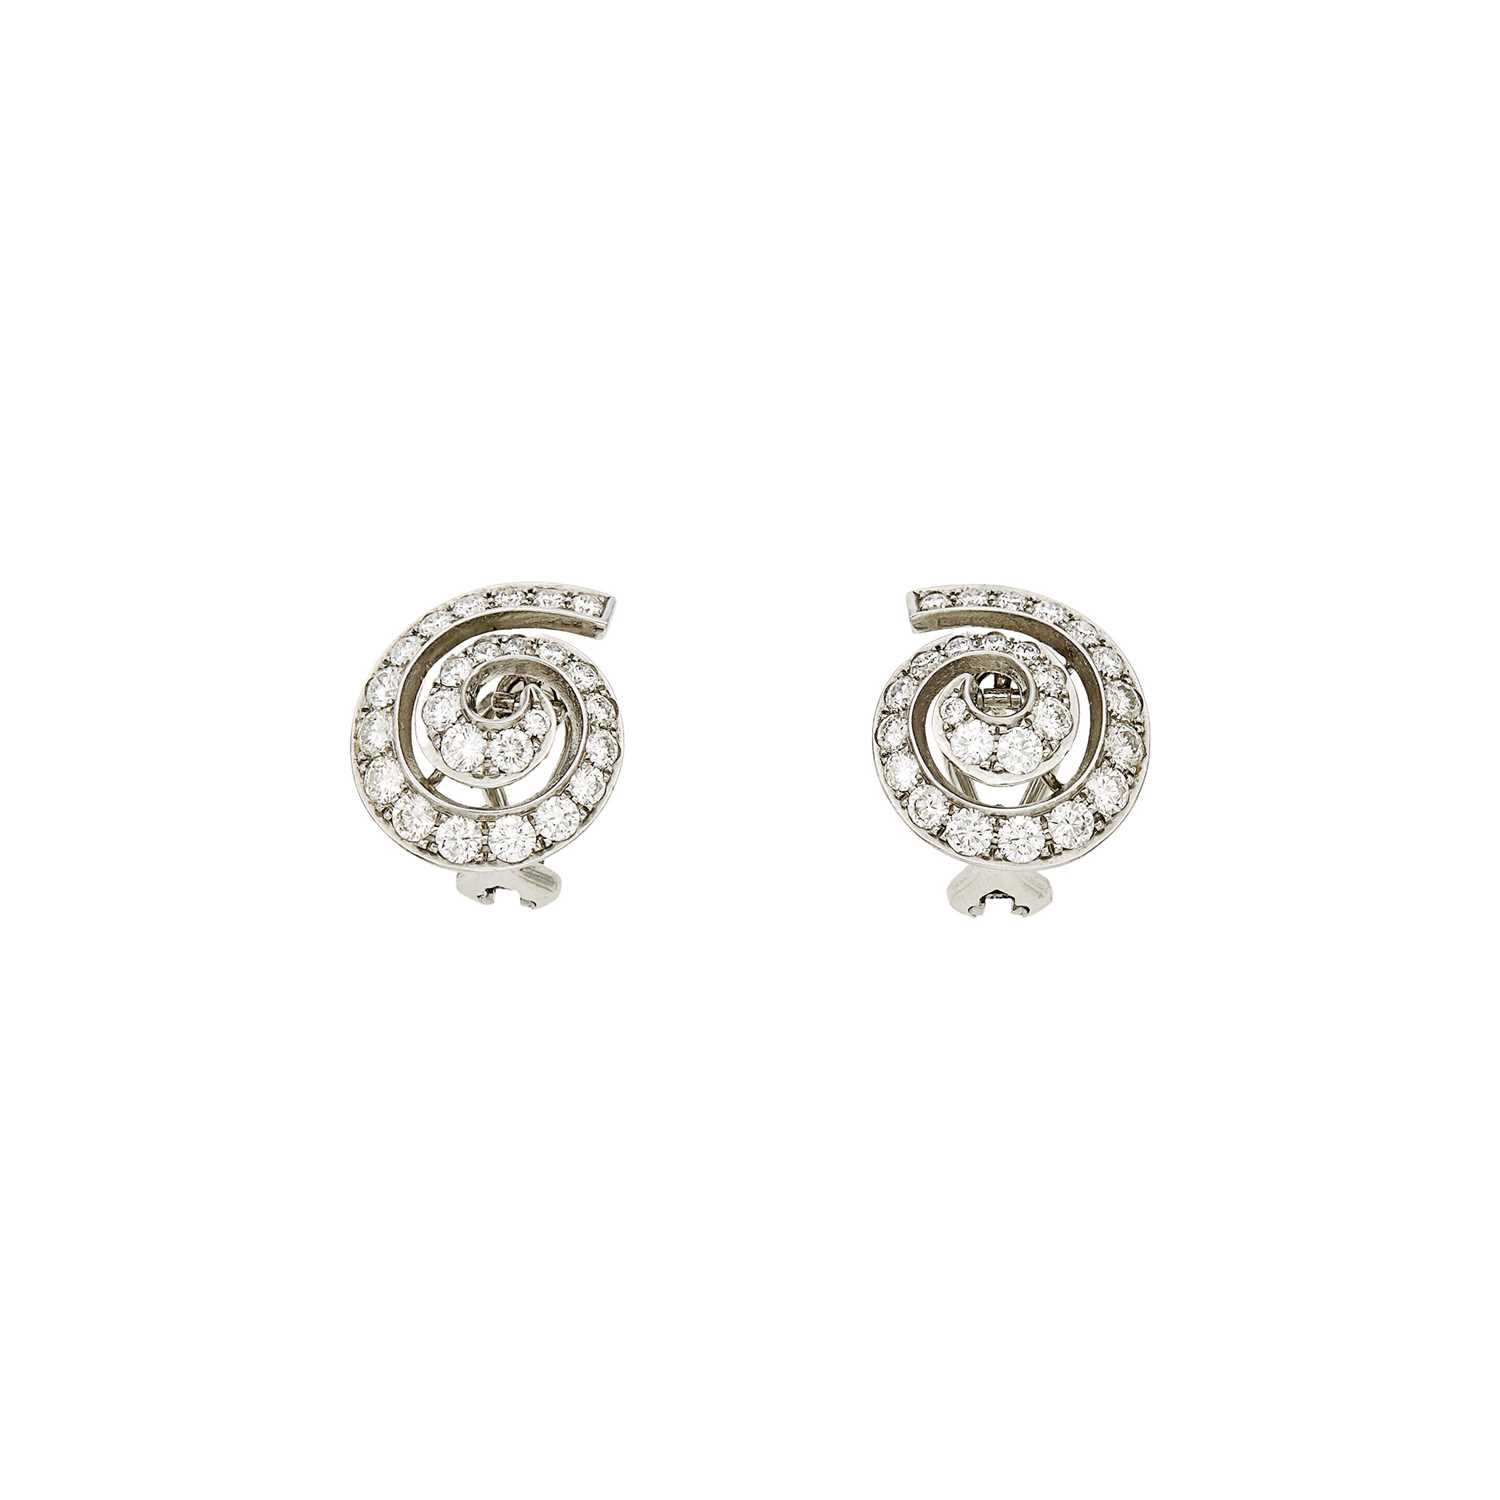 Lot 1187 - Pair of Platinum and Diamond Swirl Earrings